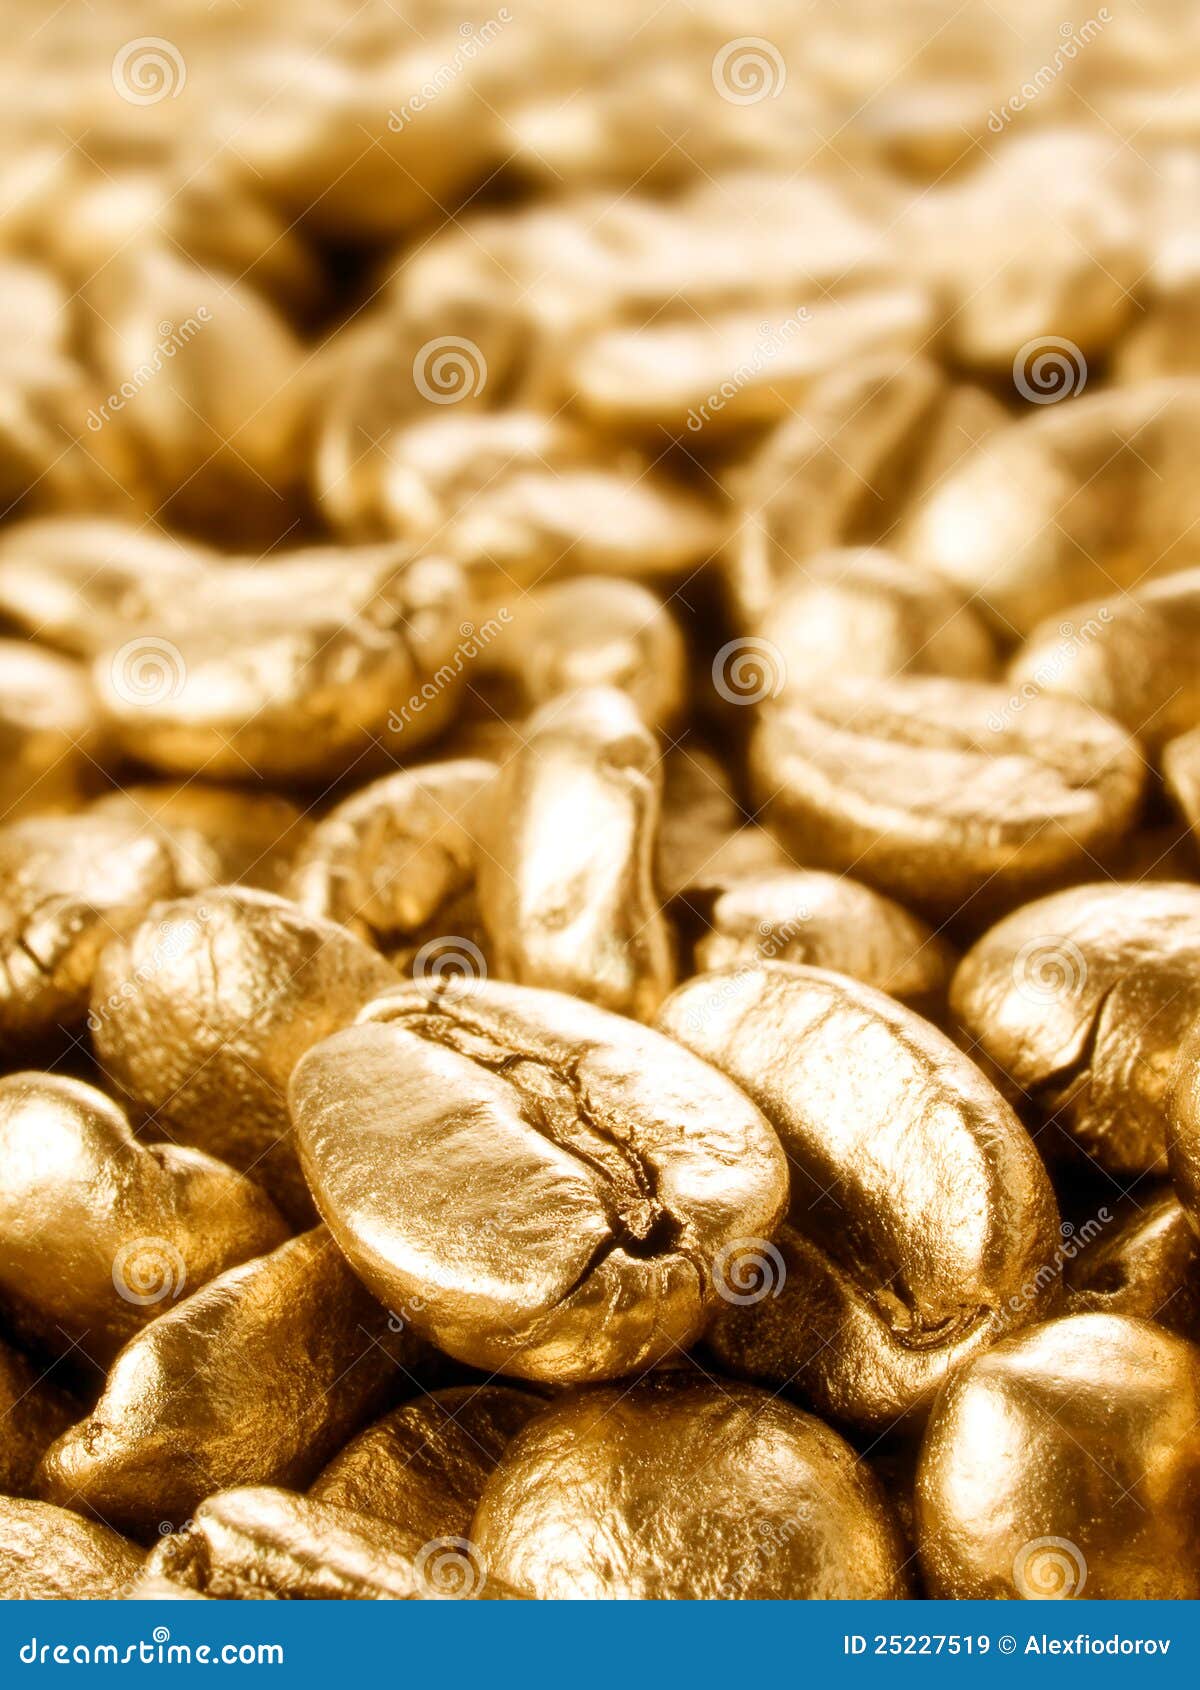 coffee gold closeup background.